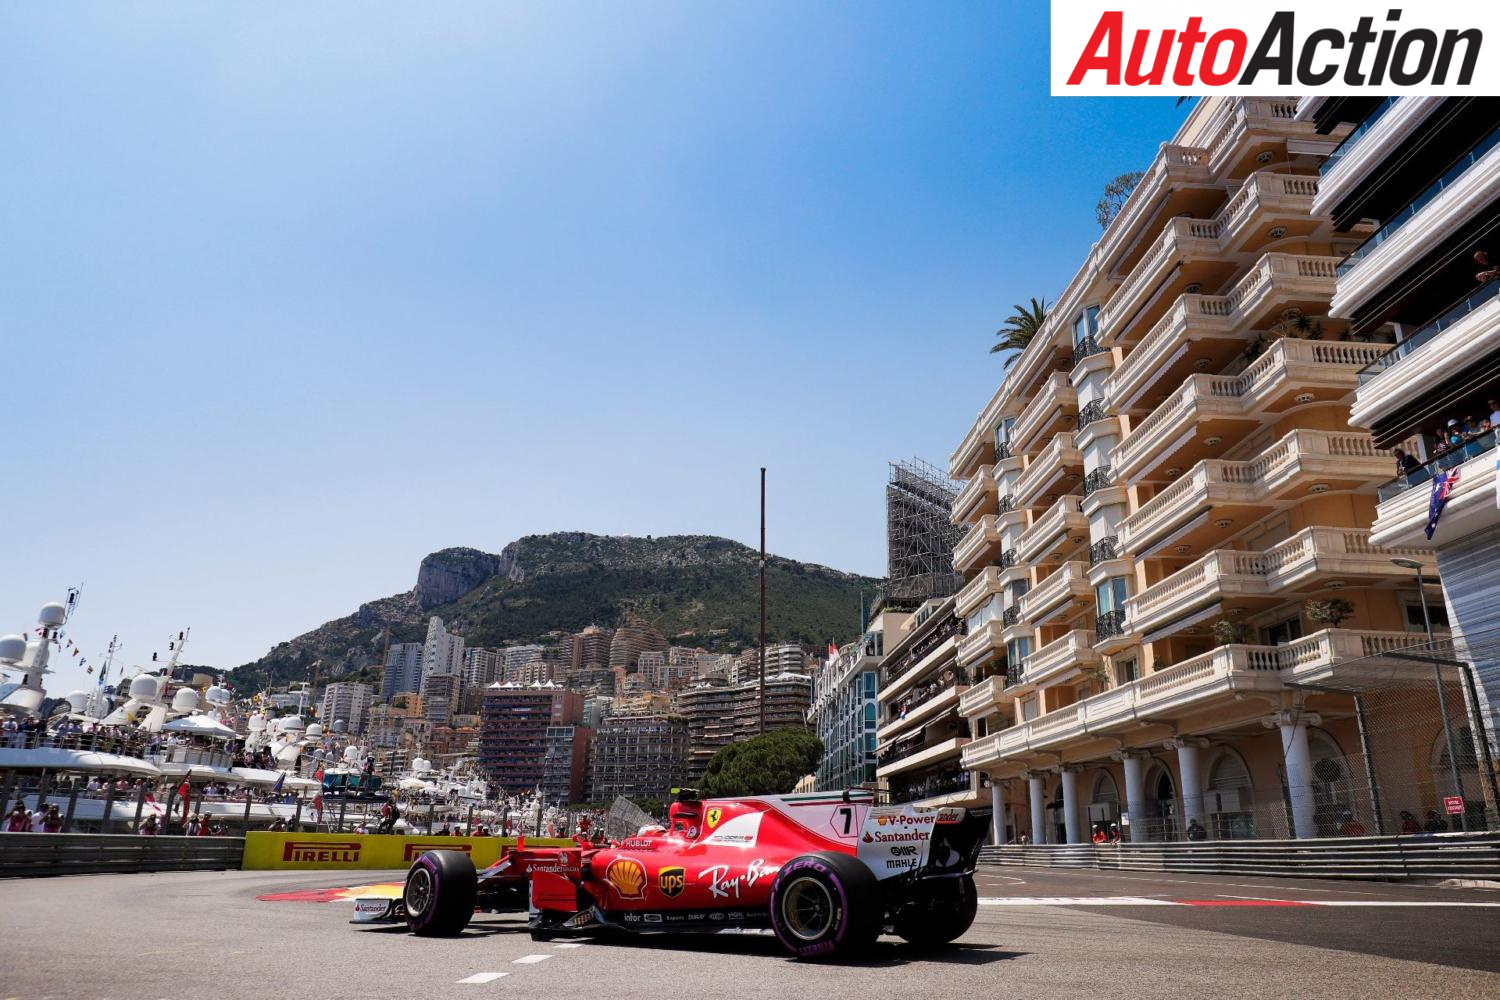 Kimi Raikkonen has qualified on pole for the Monaco Grand Prix - Photo: LAT